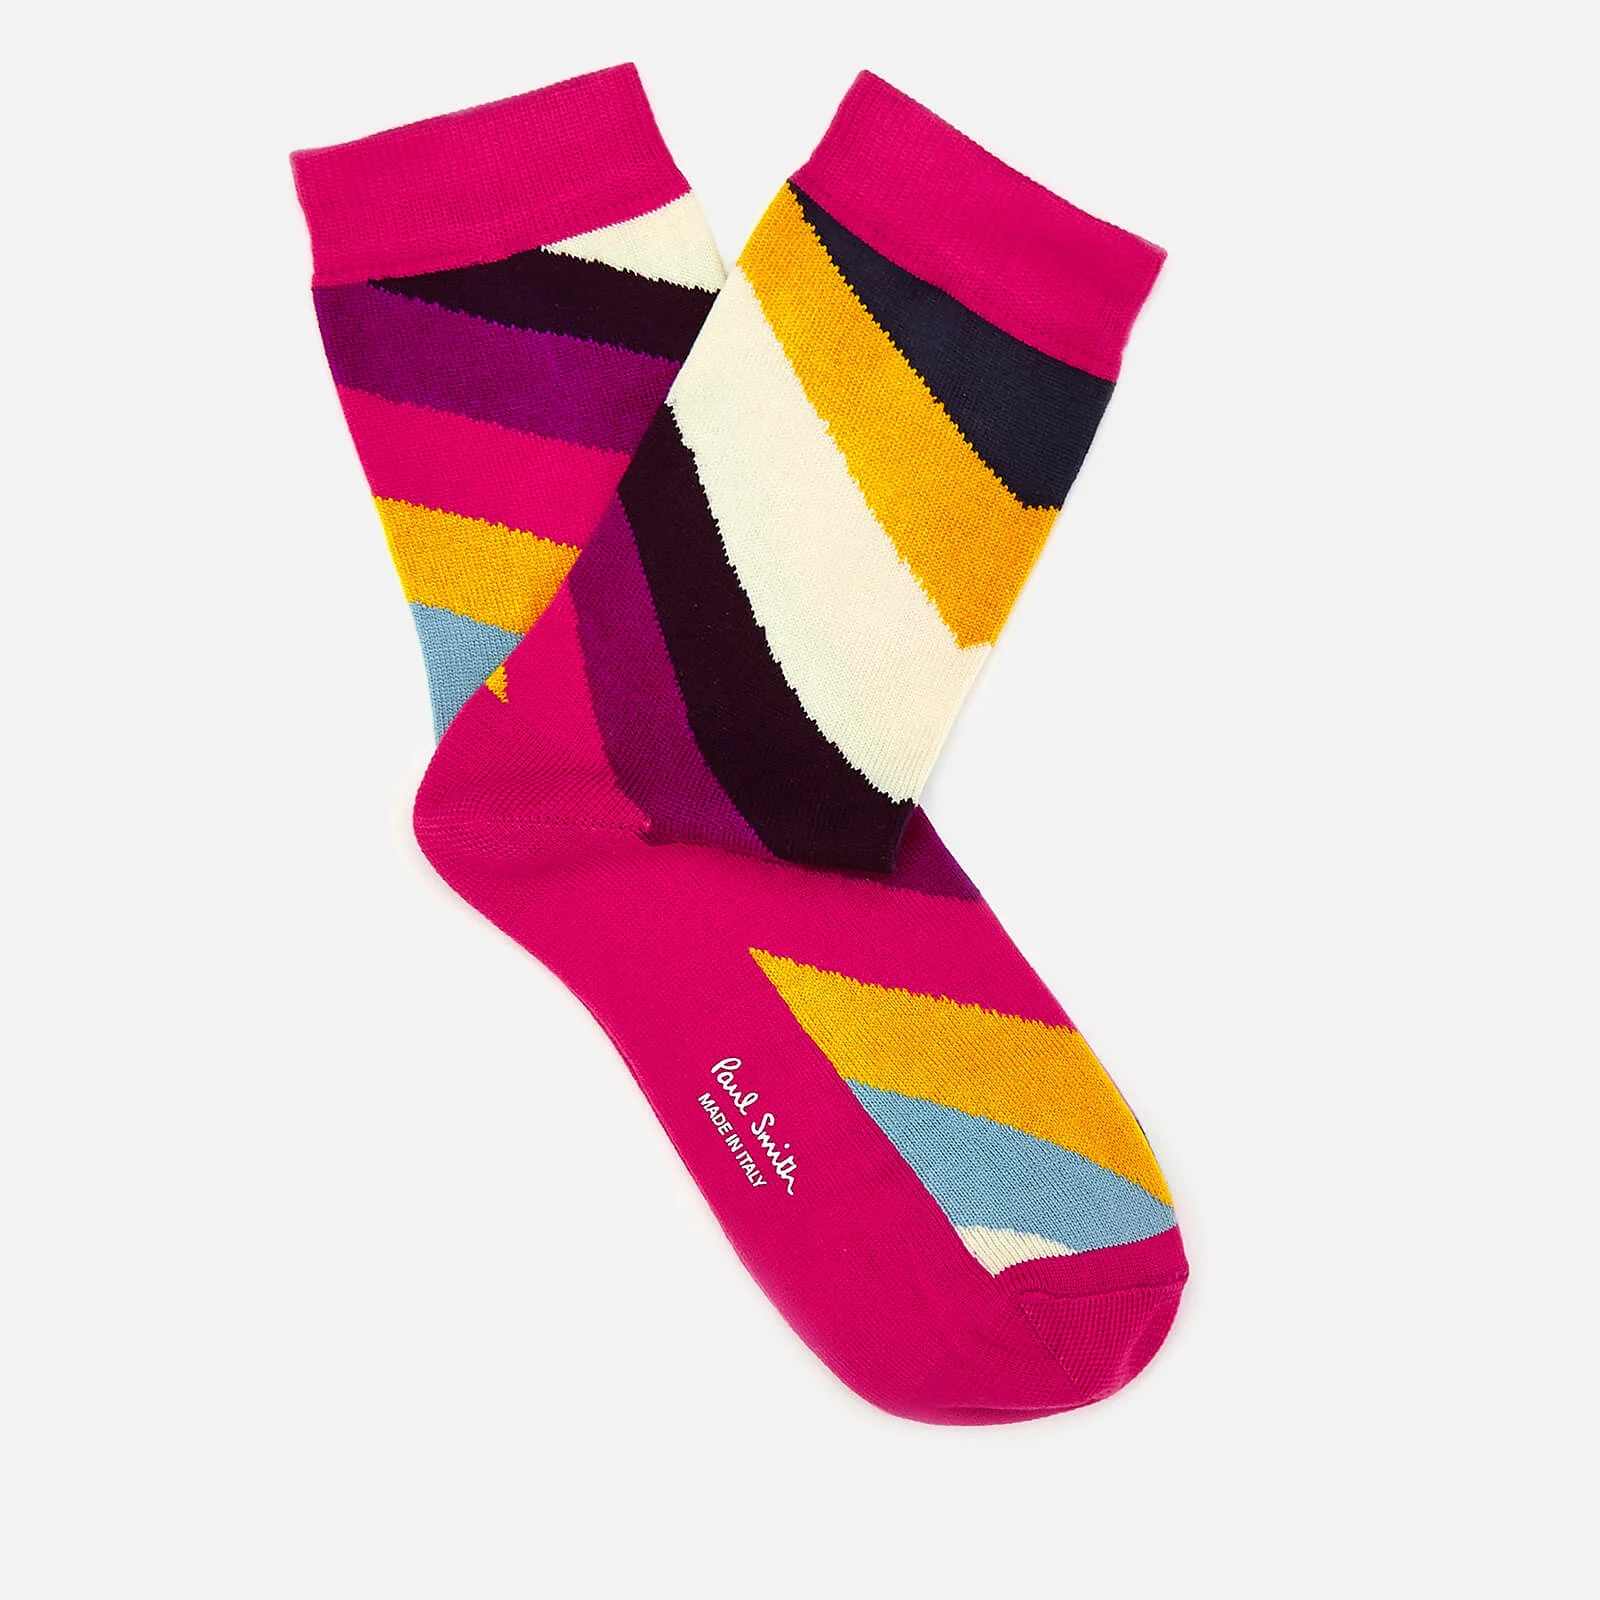 Paul Smith Women's Odd Swirl Socks - Multi Image 1